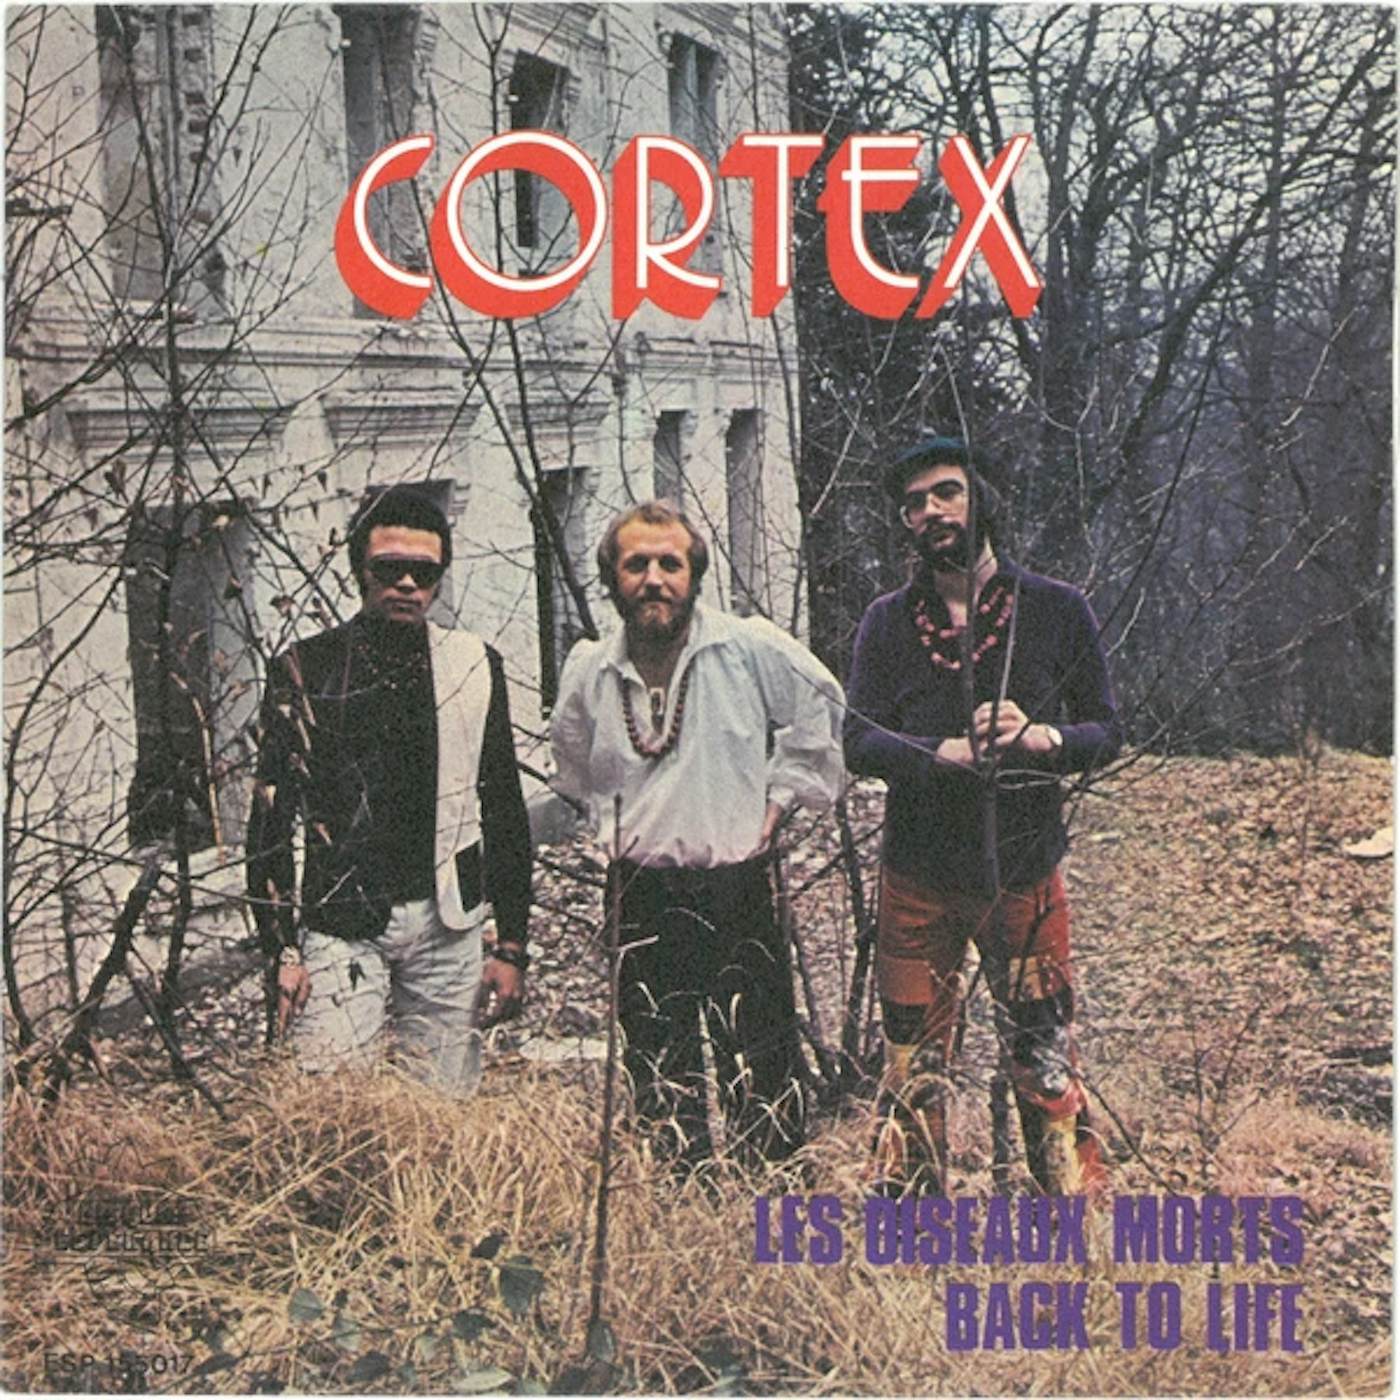 Cortex LES OISEAUX MORTS / BACK TO LIFE Vinyl Record